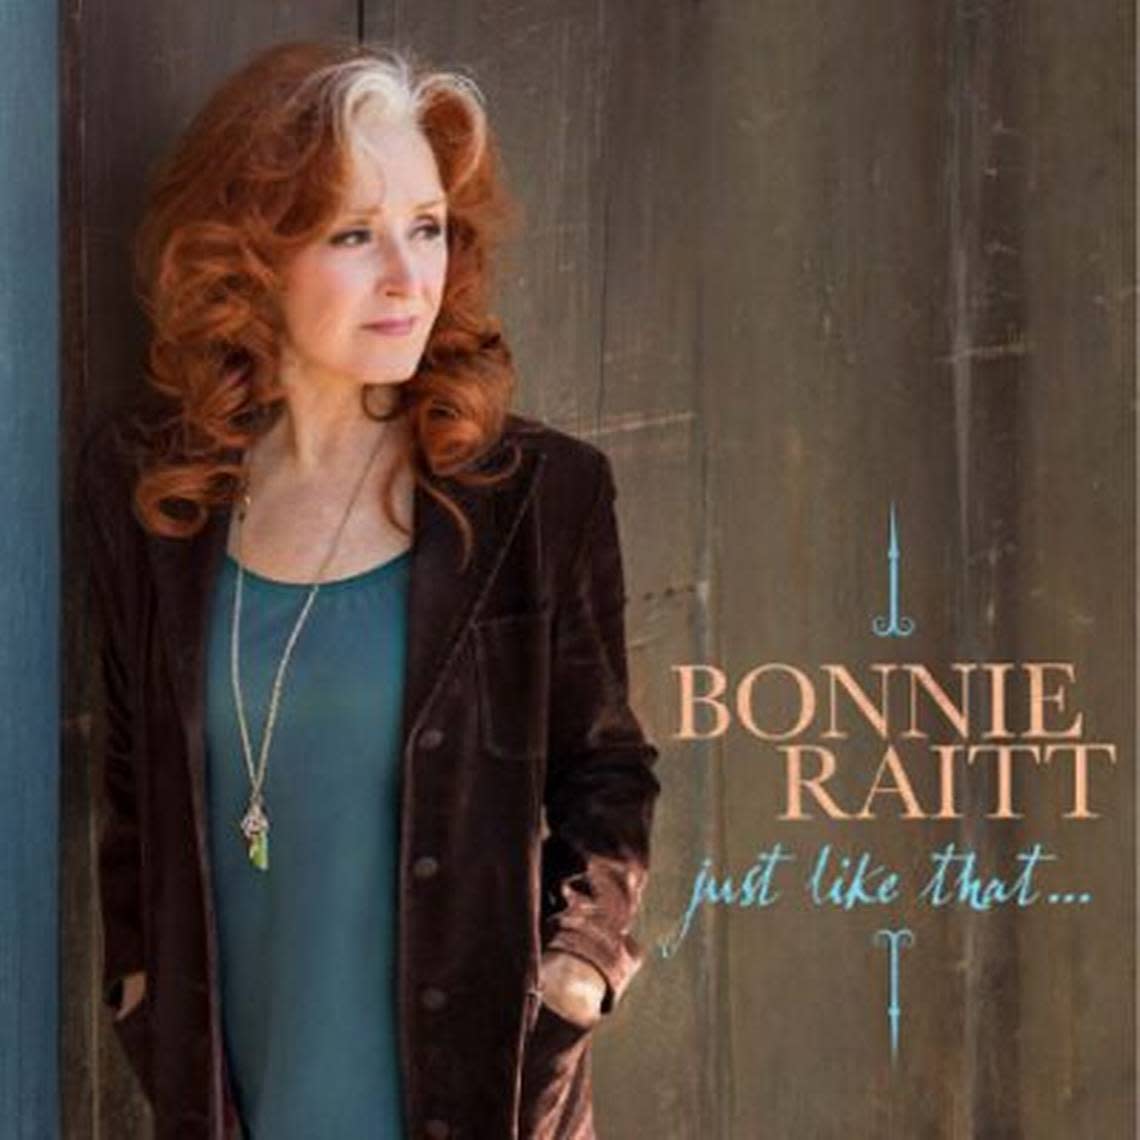 Bonnie Raitt, “Just Like That”